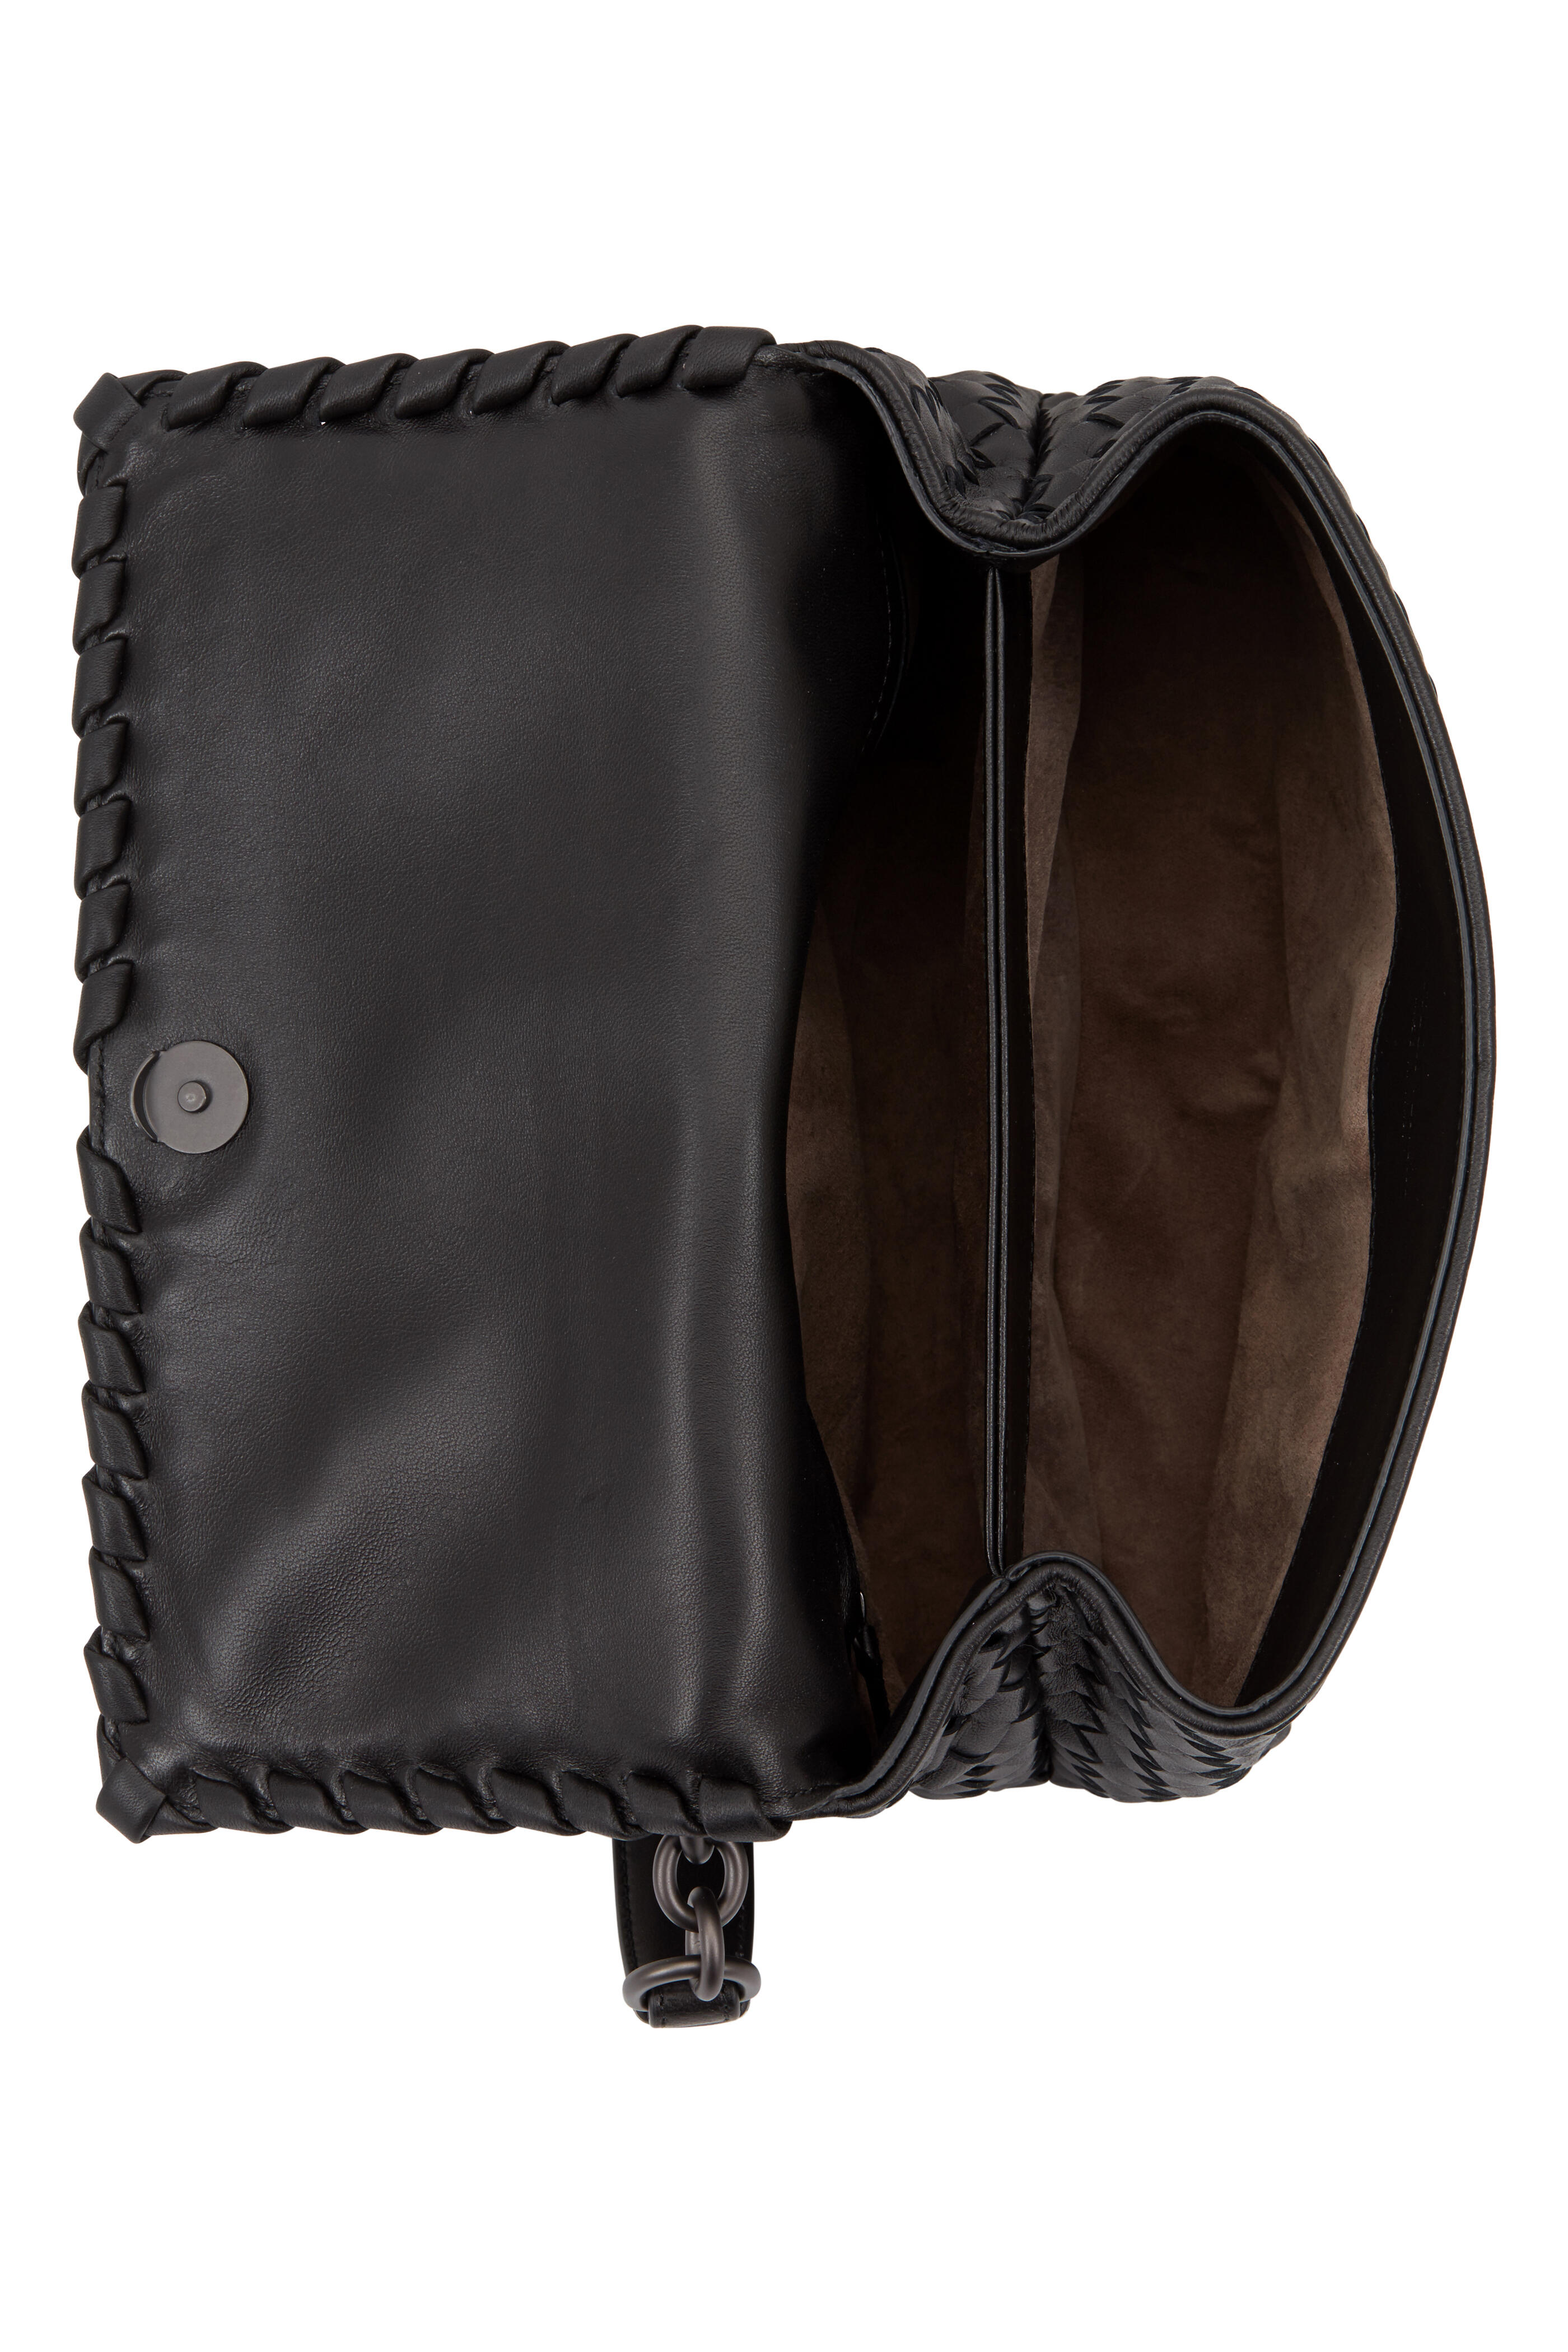 Bottega Veneta Olimpia Small Intrecciato Leather Shoulder Bag in